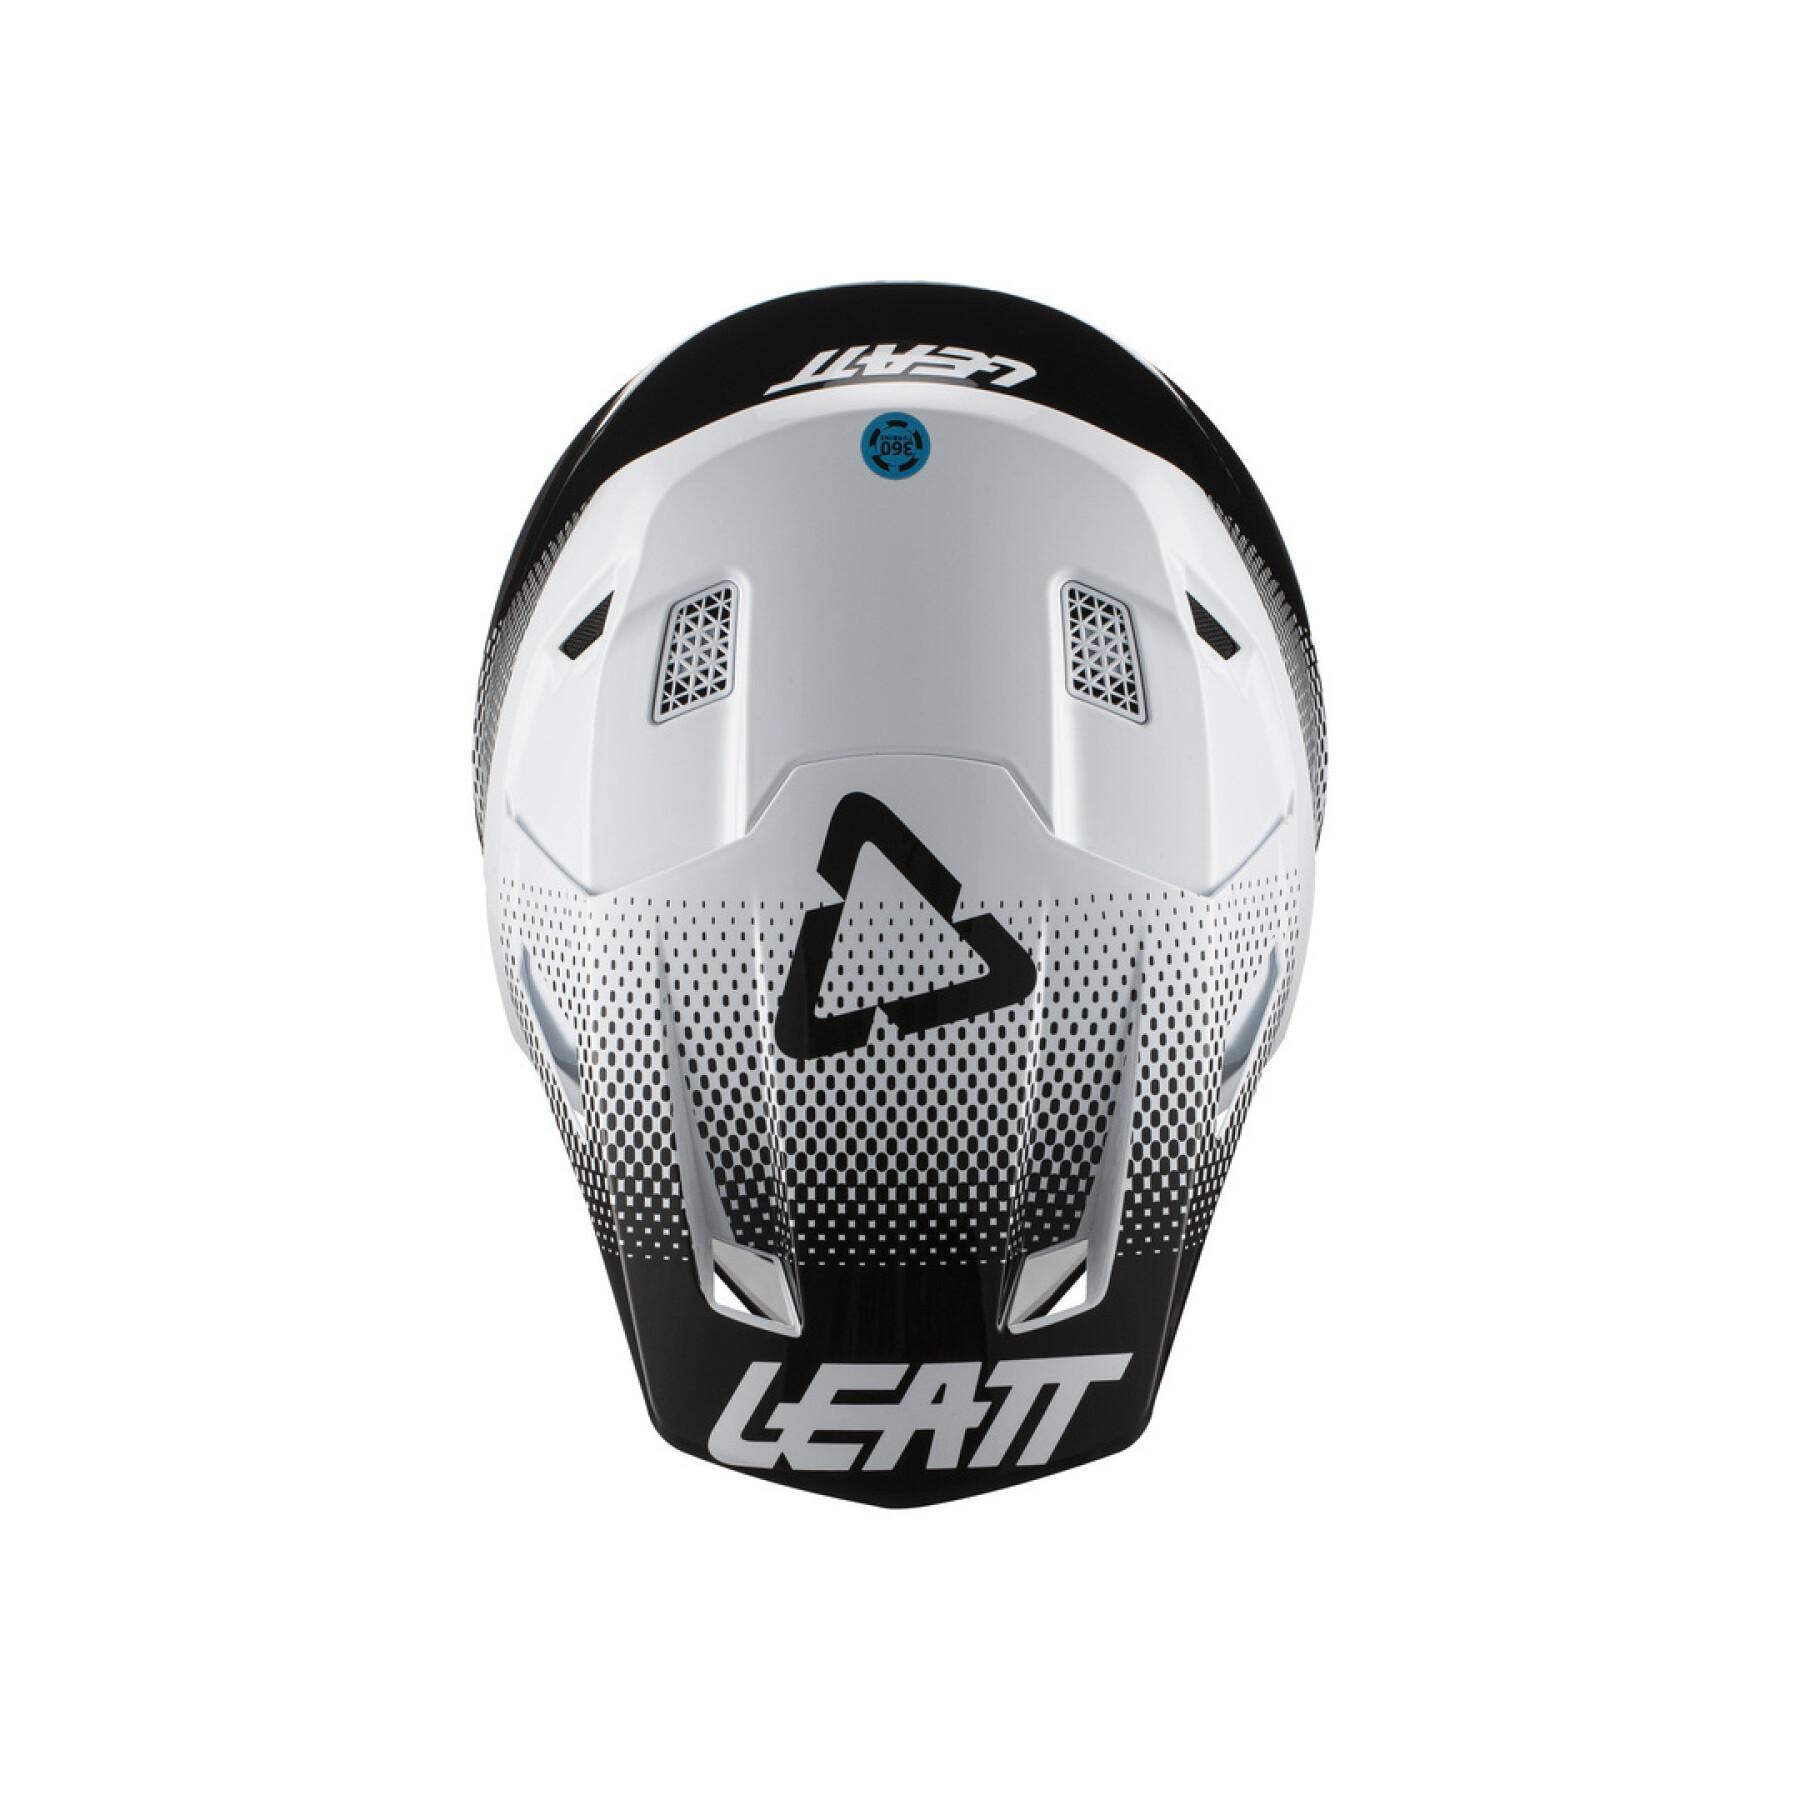 Motorhelm inclusief bril Leatt 7.5 V21.1